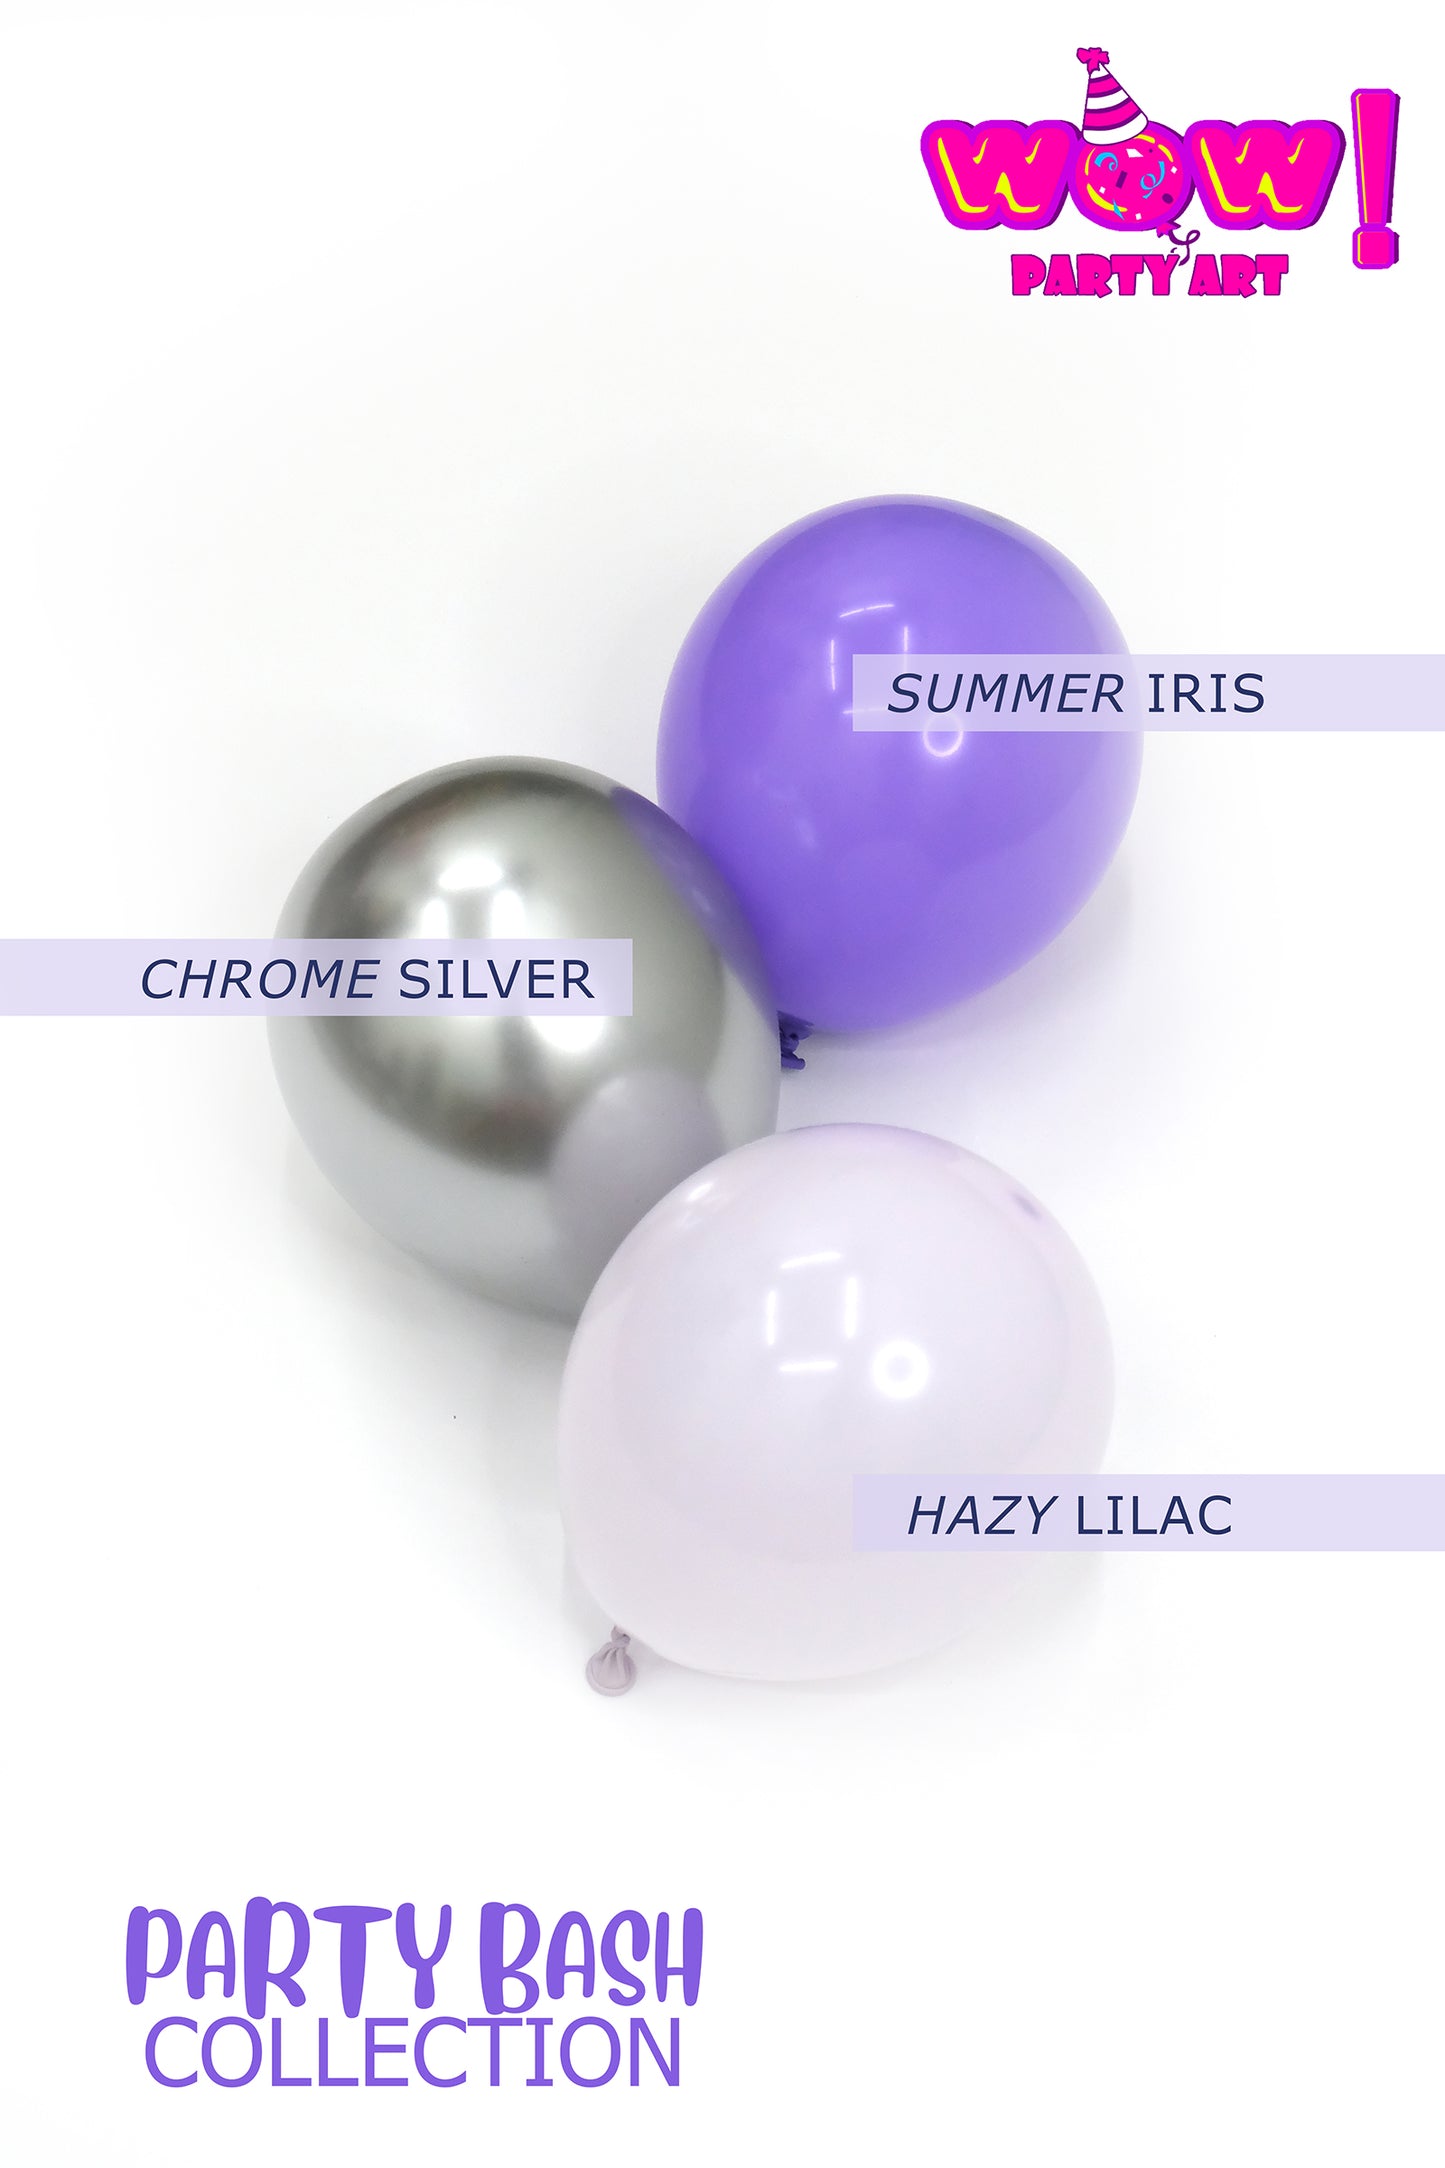 Purple Reign DIY Balloon Arch Garland Kit | Pastel Purple Lavender Lilac Chrome Silver | Kids Birthday Baby Gender Reveal Shower Party Decor